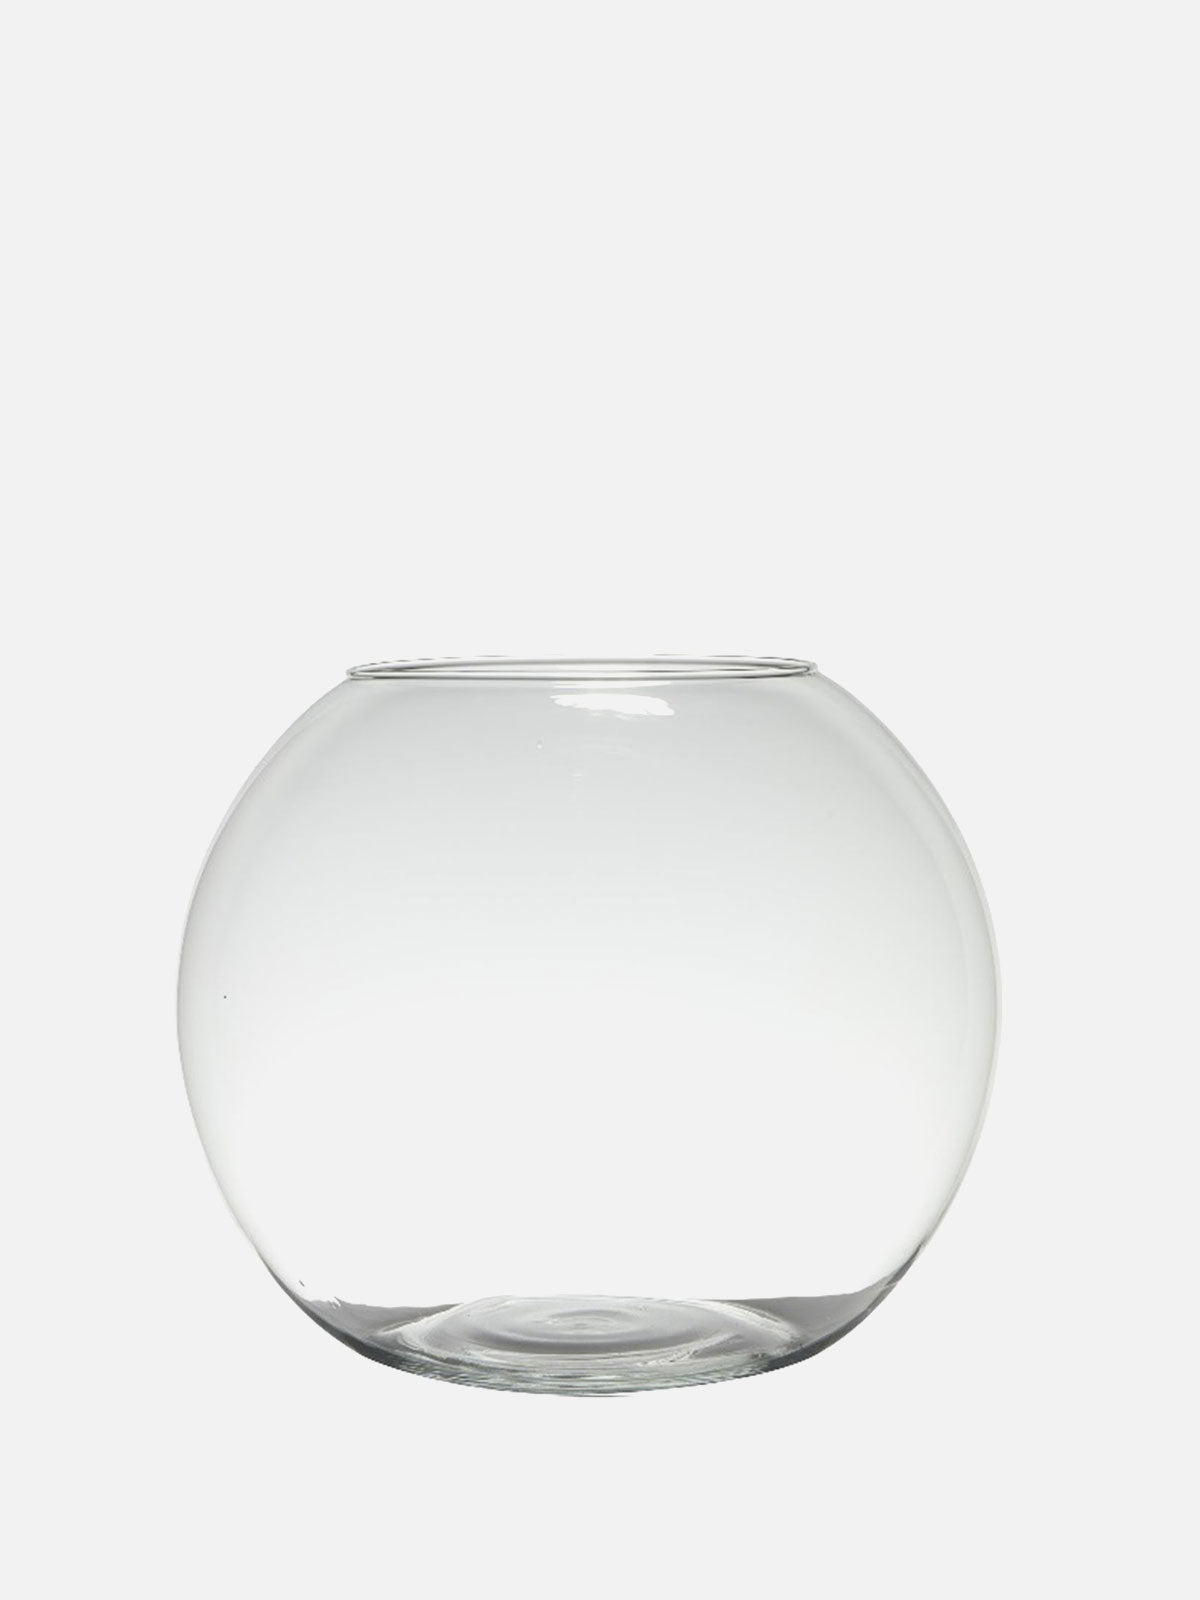 Fish Bowl Glass Vase